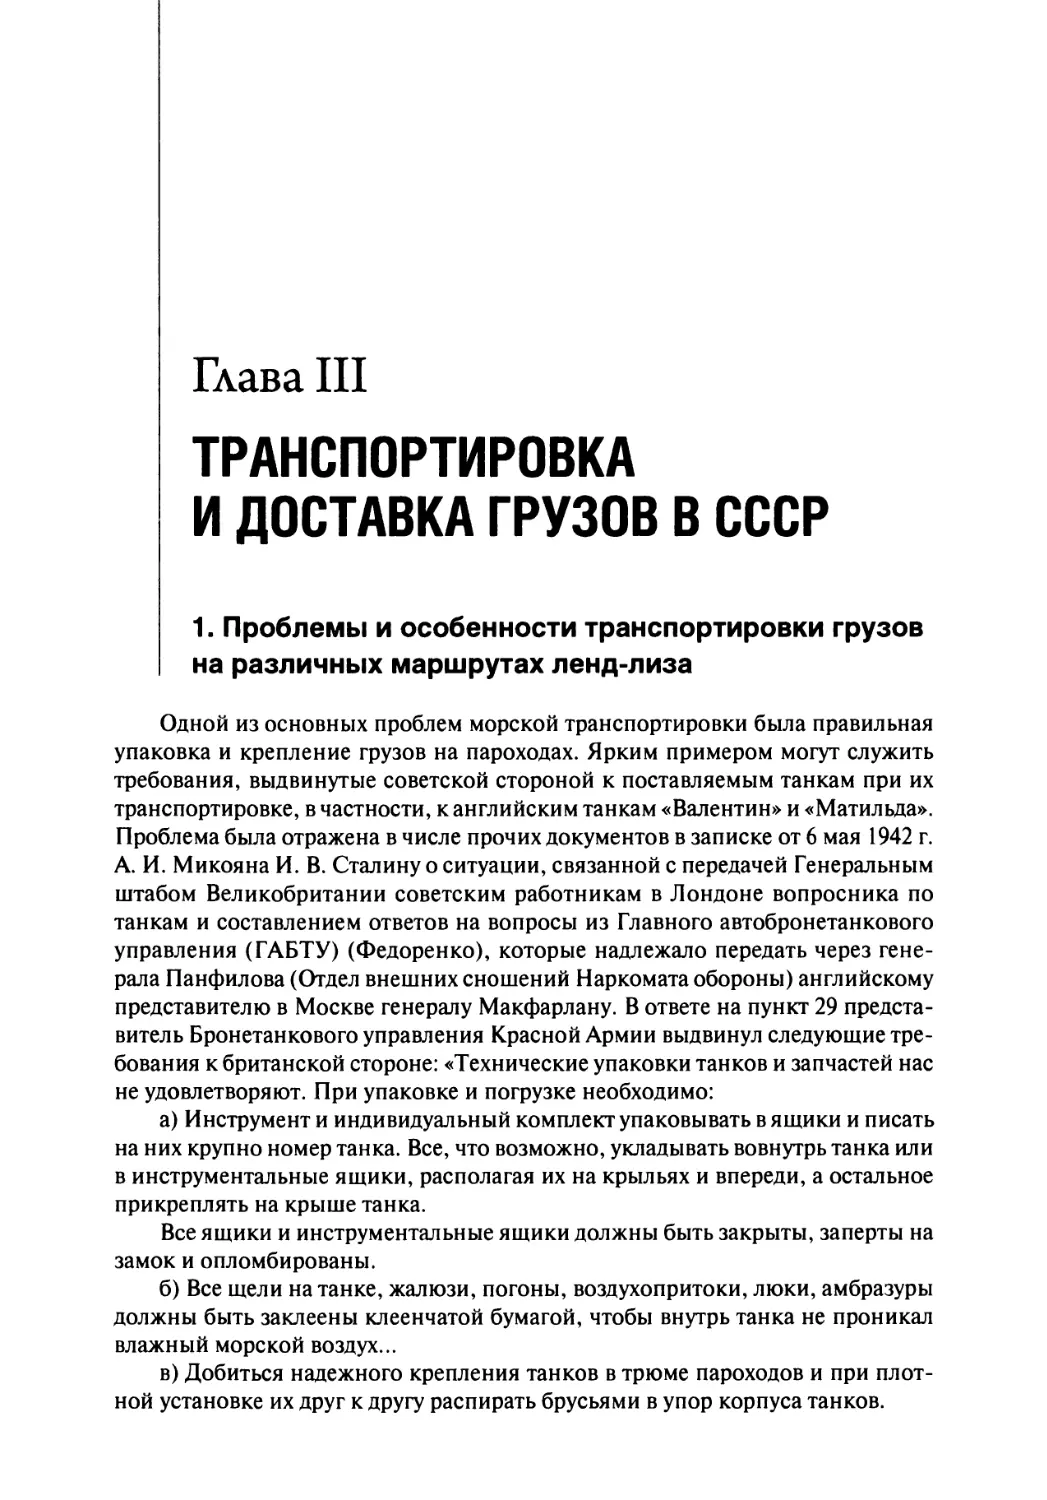 Глава III. Транспортировка и доставка грузов в СССР